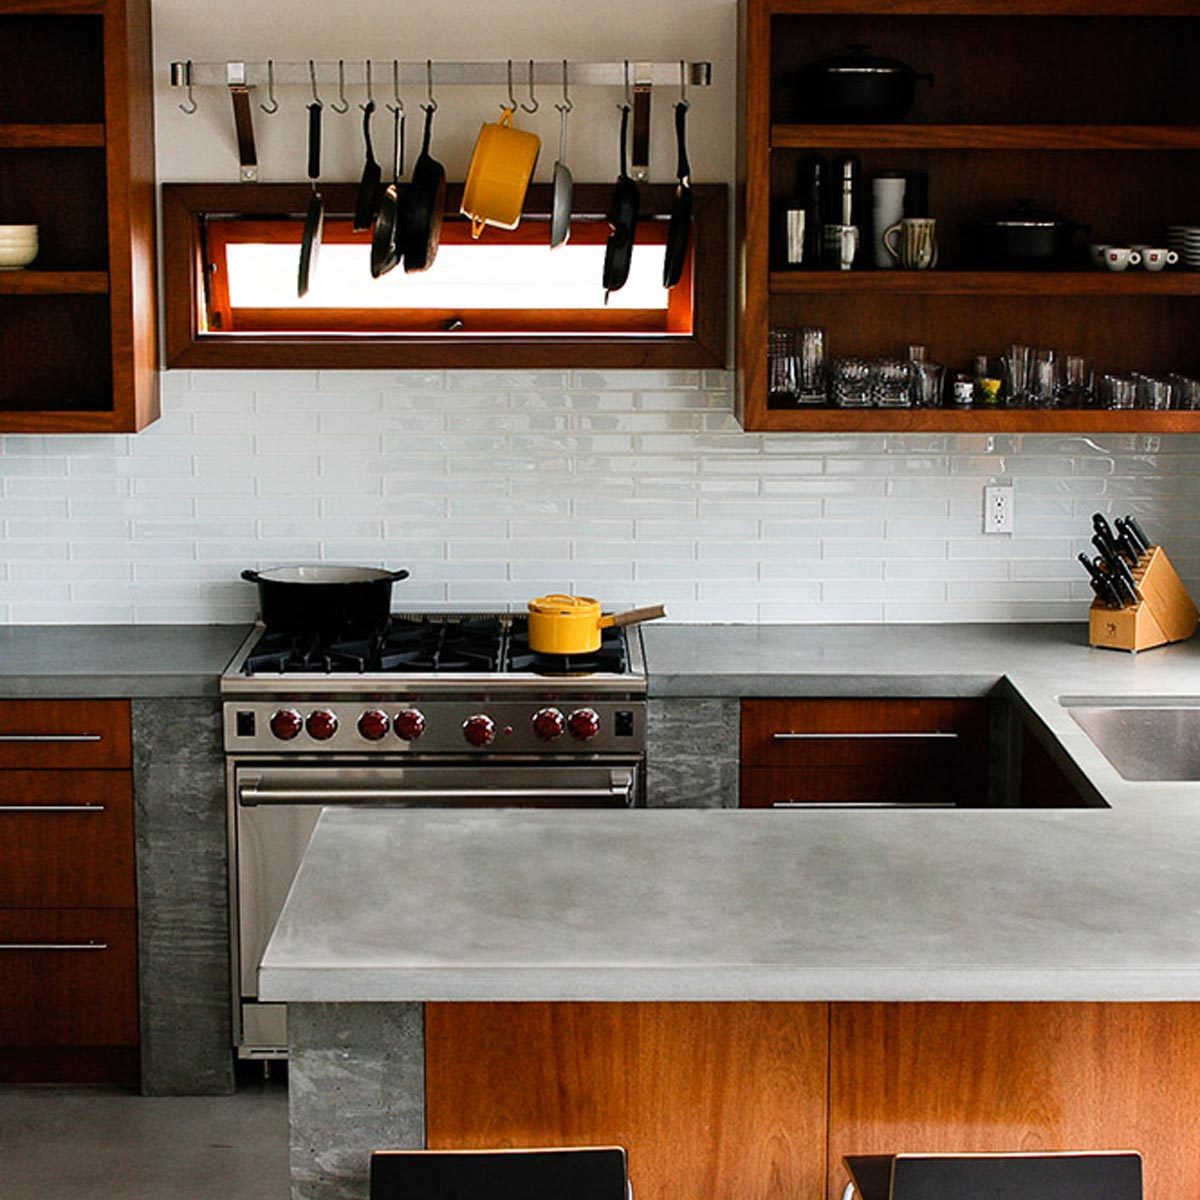 https://www.familyhandyman.com/wp-content/uploads/2019/02/custom-kitchen-portfolio-by-concrete-wave-design-concrete-countertops-boardformed-board-formed-18-1.jpg?resize=568%2C568